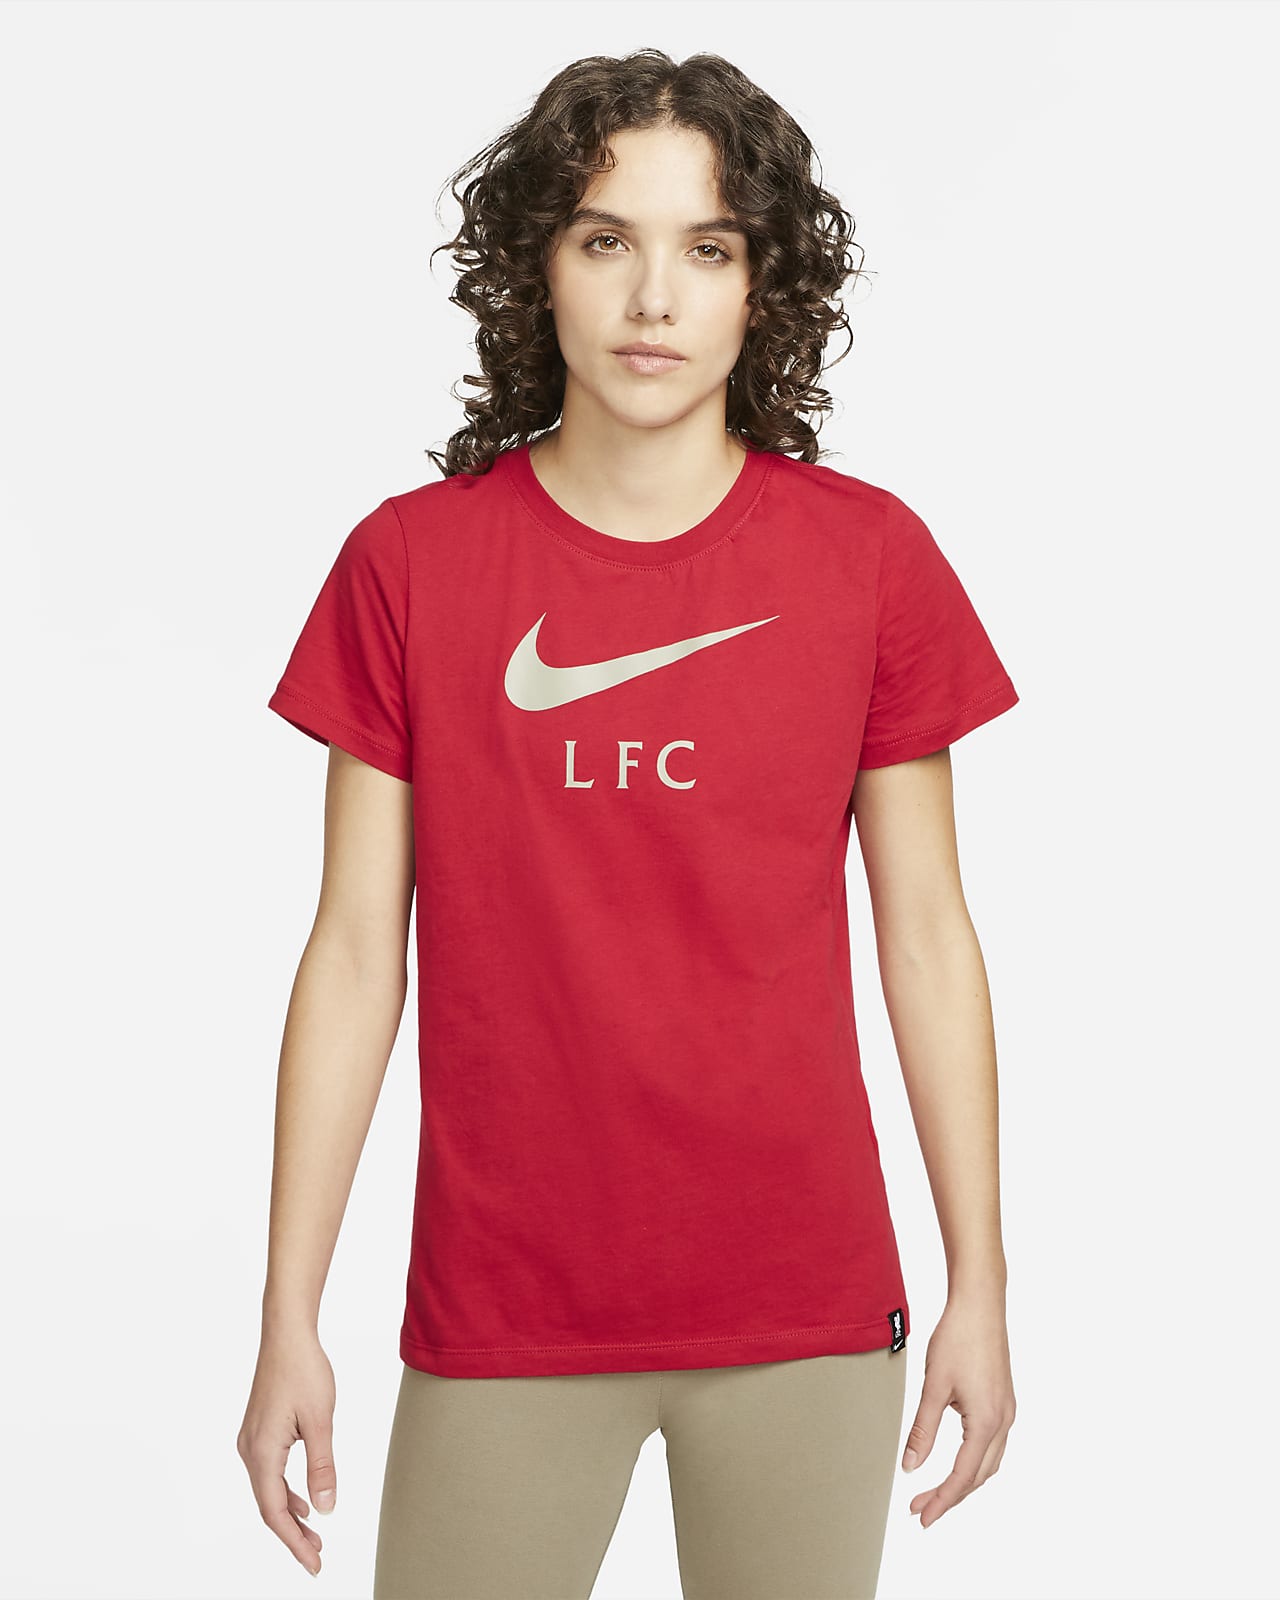 Liverpool FC Women's Nike.com